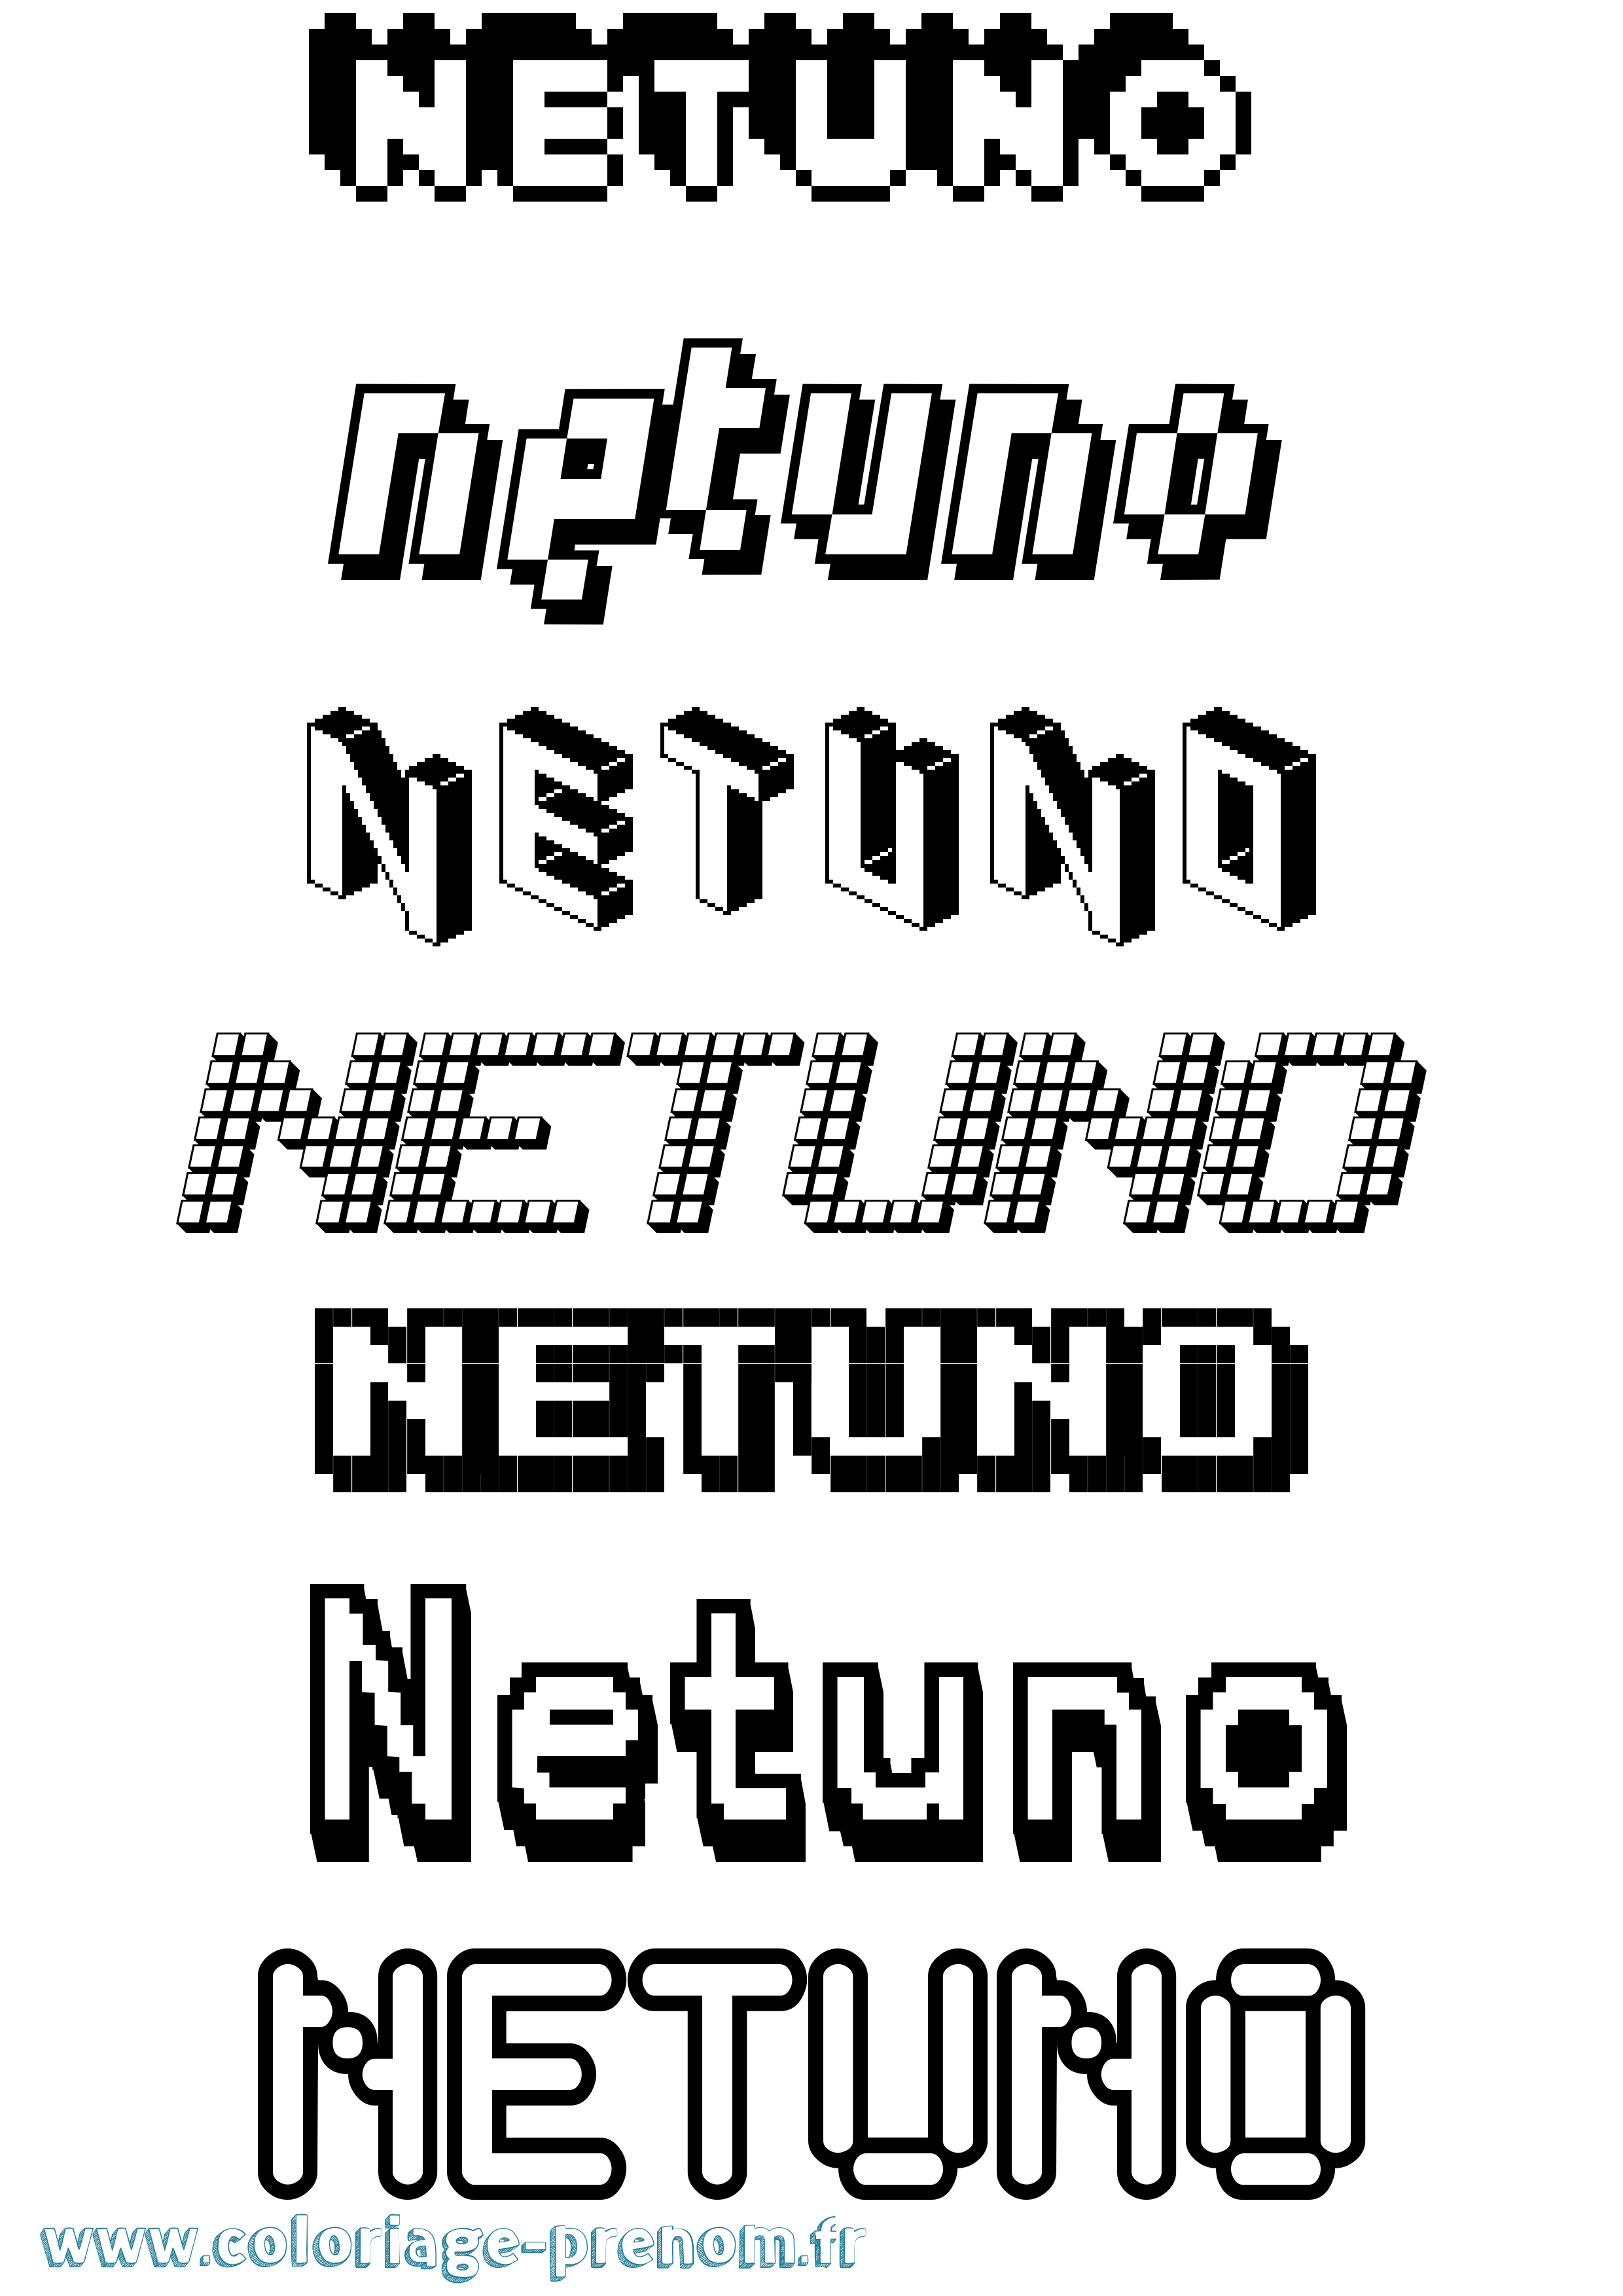 Coloriage prénom Netuno Pixel